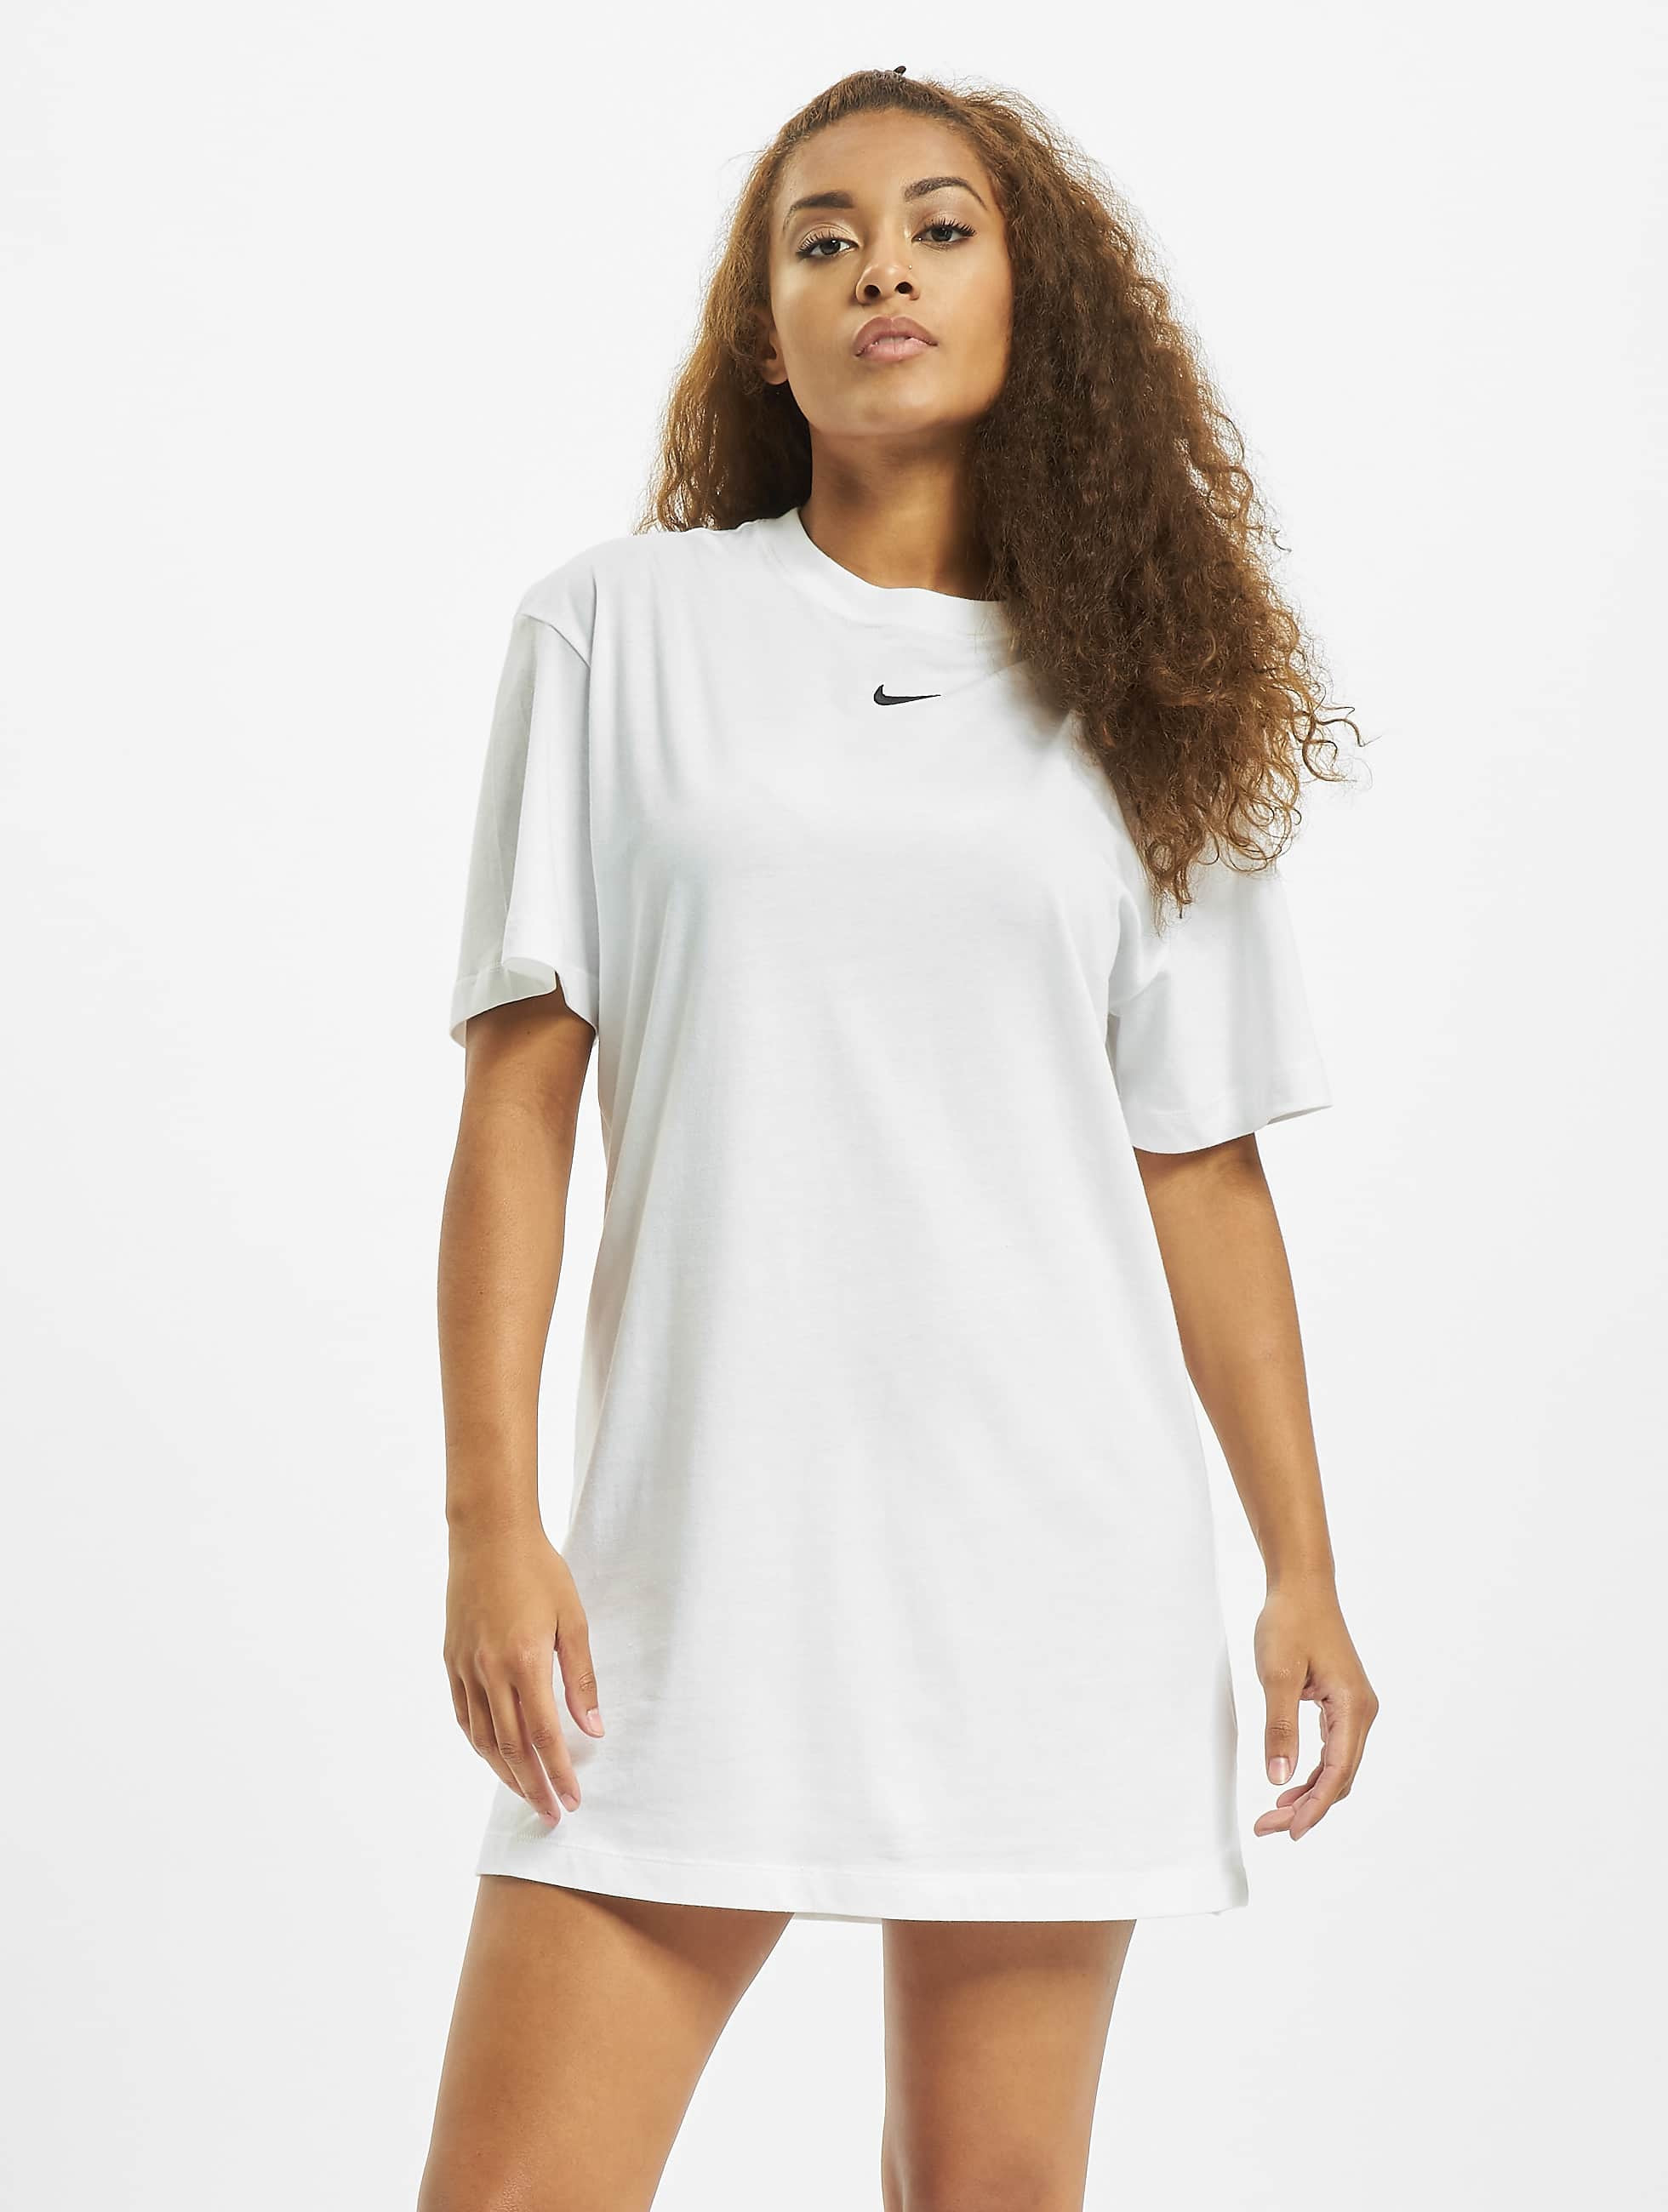 Nike / Dress Essential in white 737605